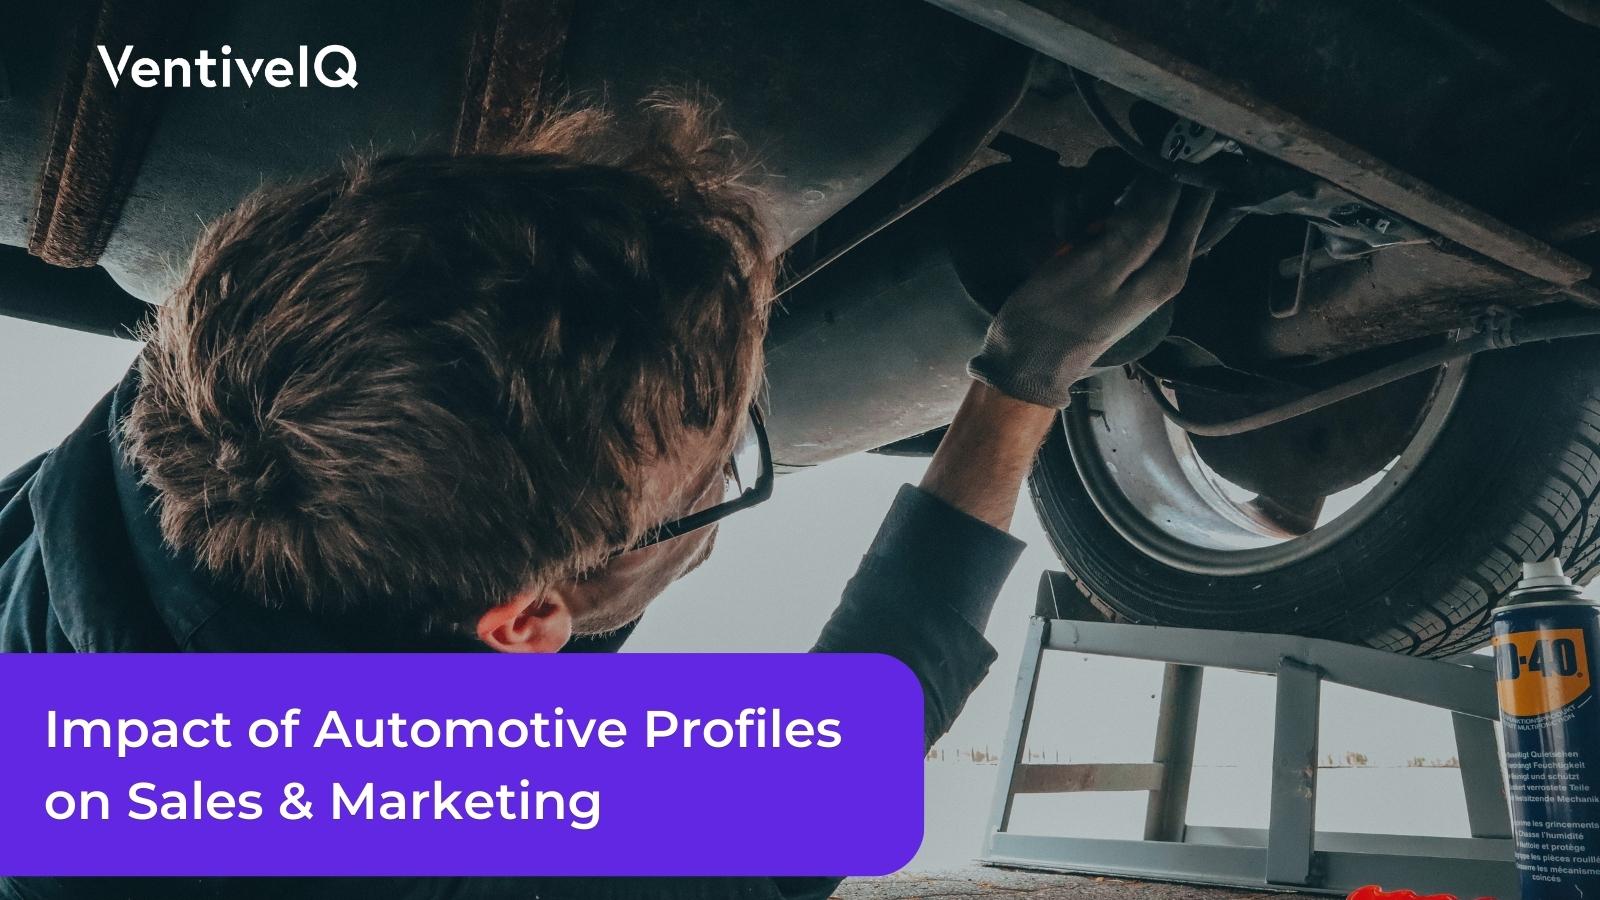 The Impact of Automotive Profiles on Sales & Marketing